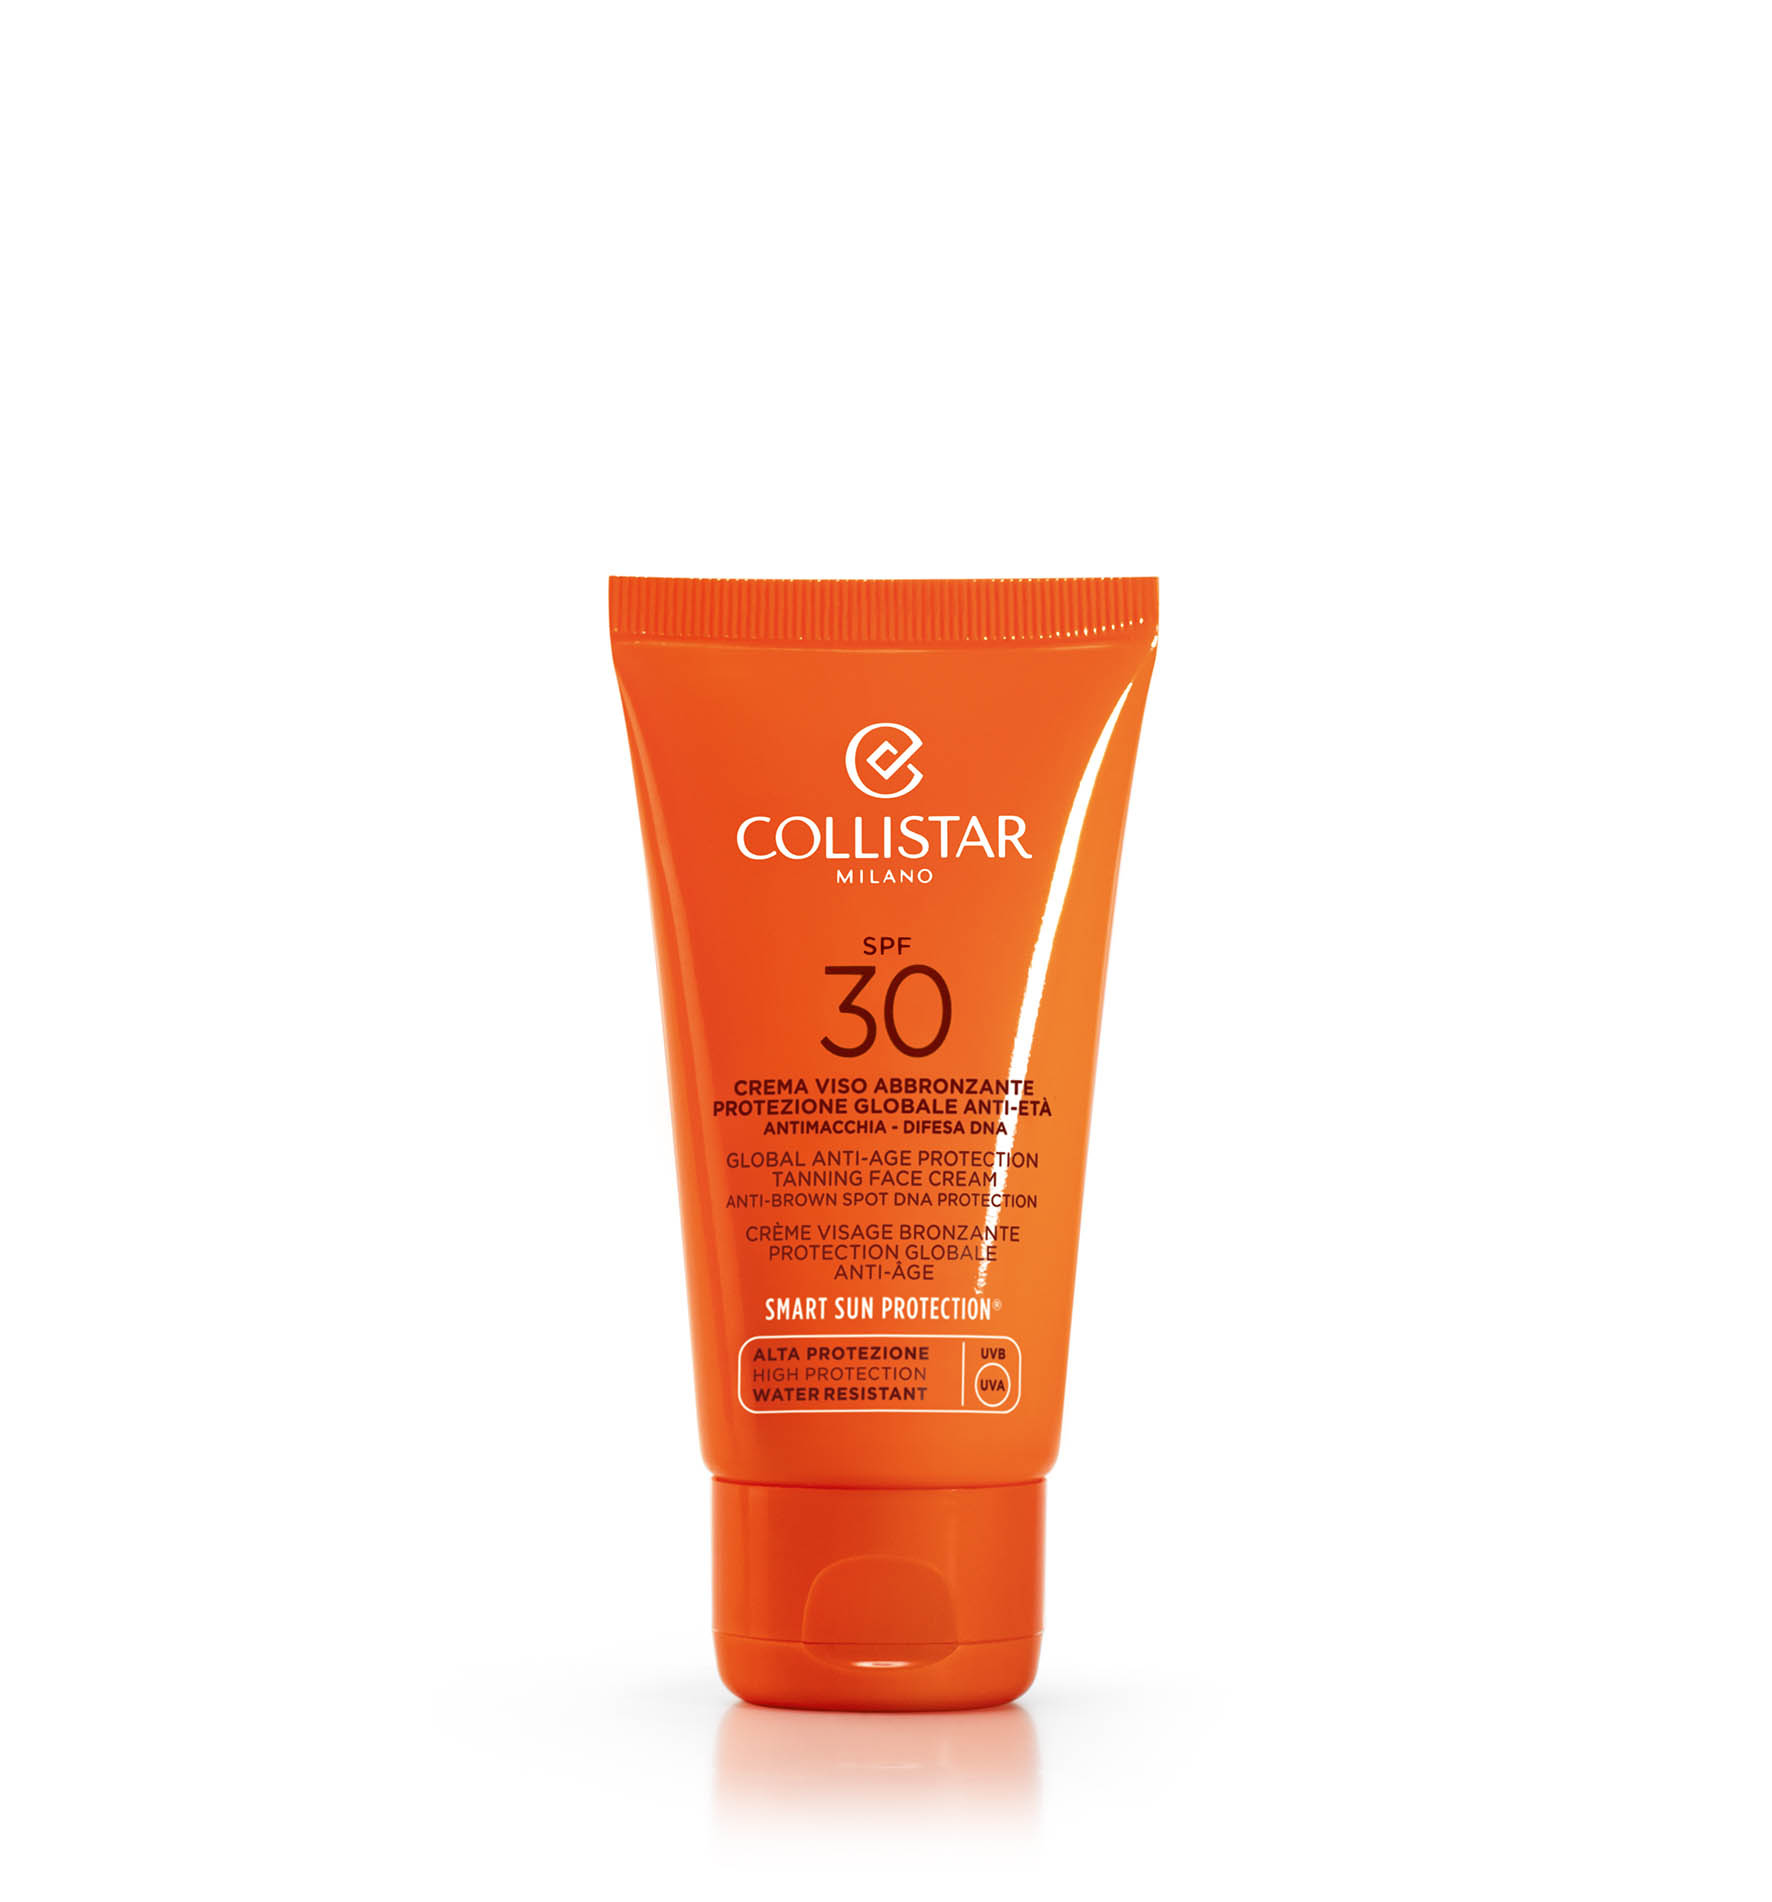 GLOBAL ANTI-AGE PROTECTION TANNING FACE CREAM SPF 30 - Sun cream | Collistar - Shop Online Ufficiale